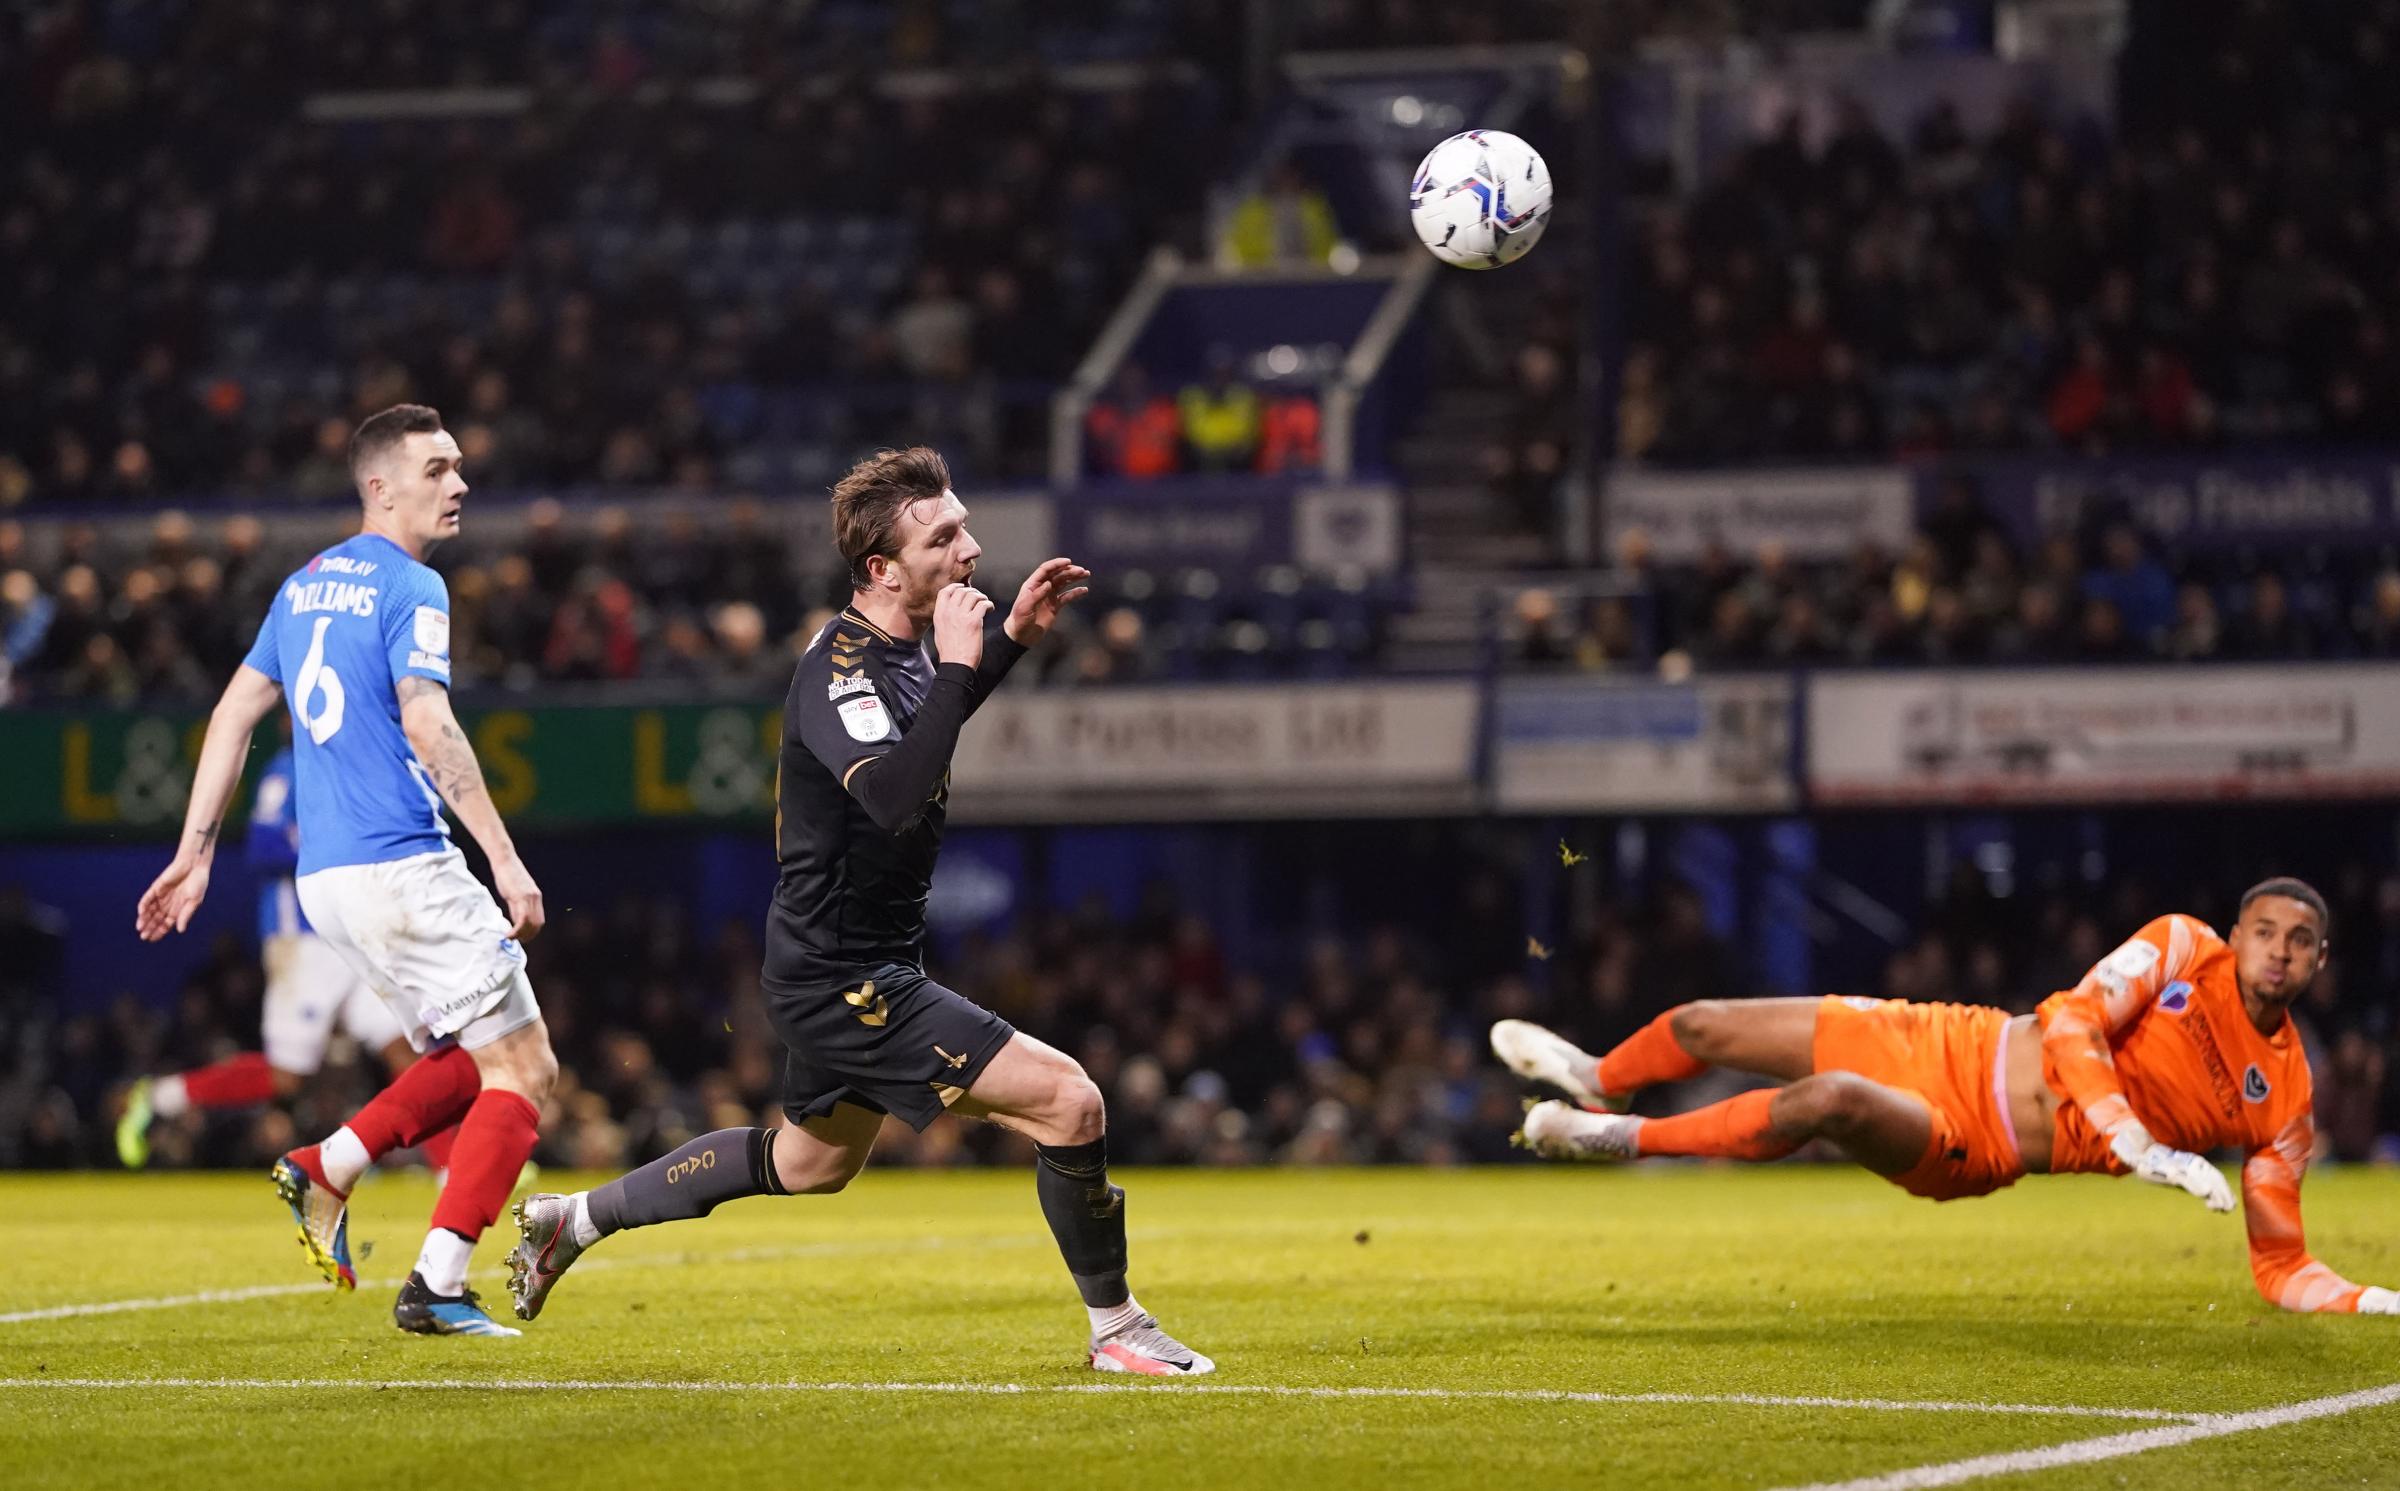 Watch new Southampton goalkeeper Gavin Bazunu's best saves